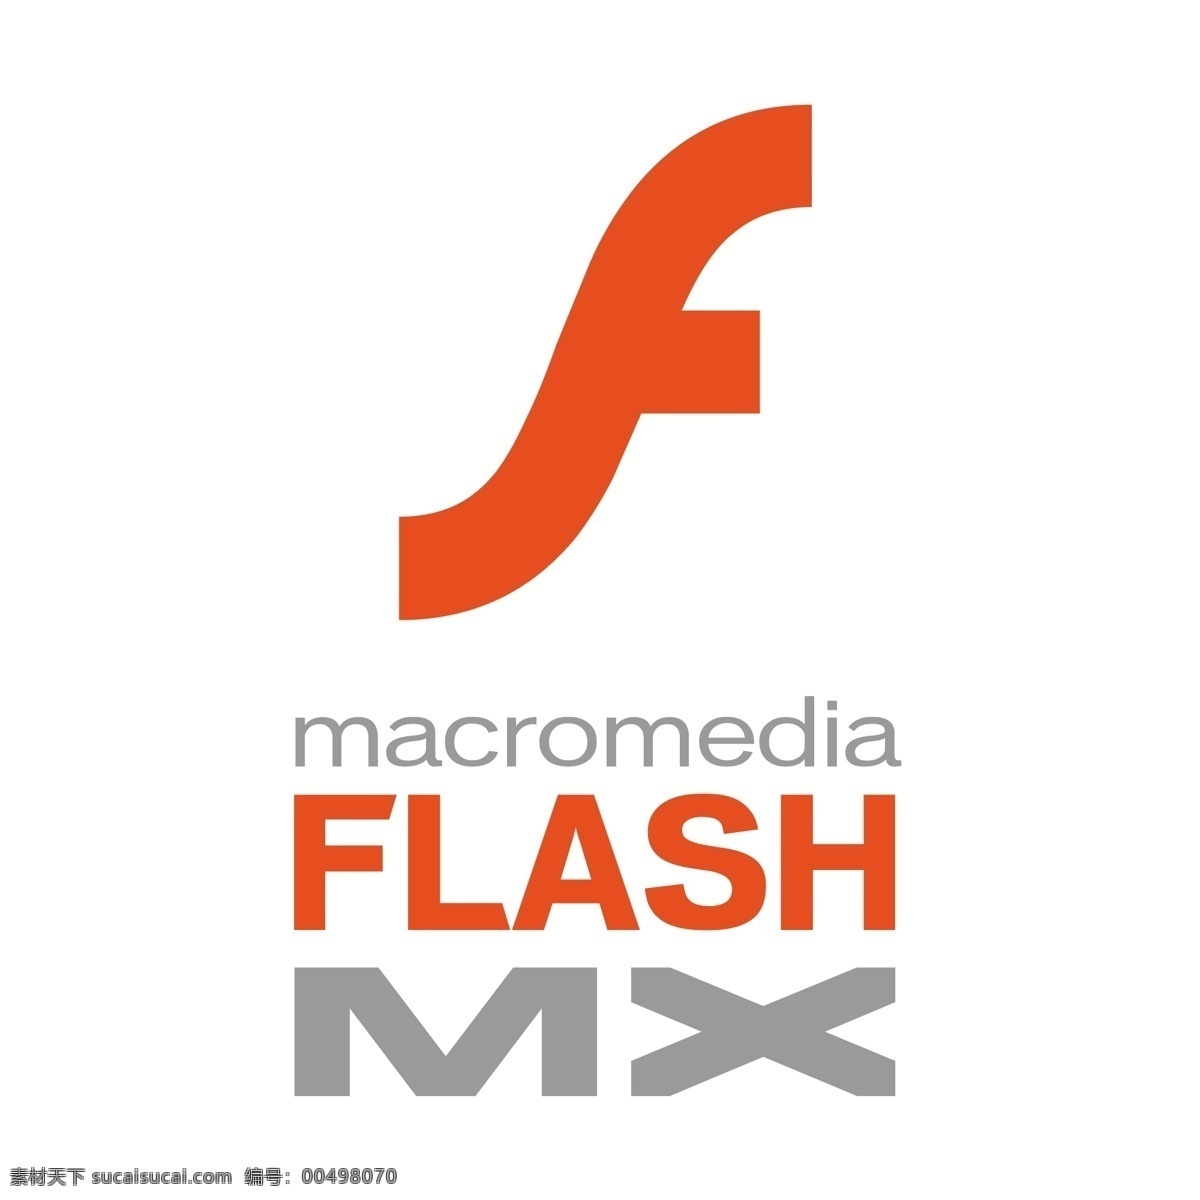 flash mx macromedia 文件下载 mx免费下载 向量 标志 标识 矢量图 建筑家居